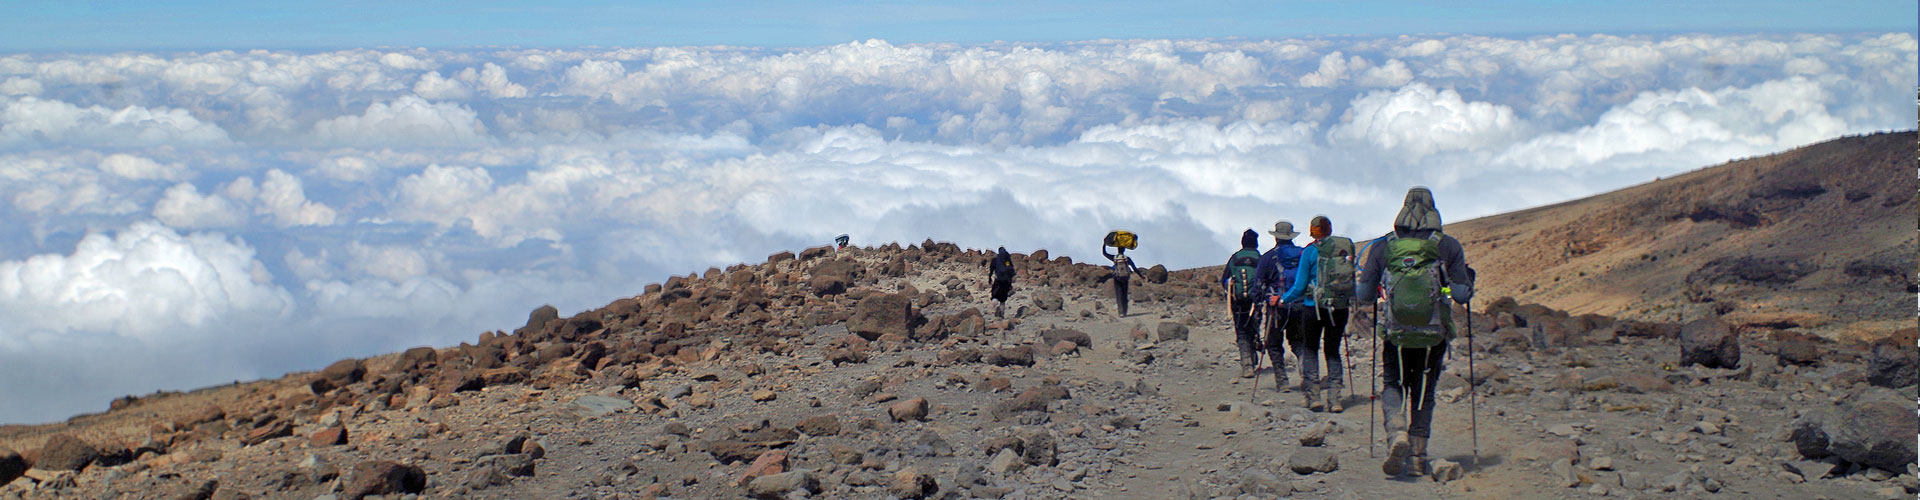 Trekkers descend towards the clouds